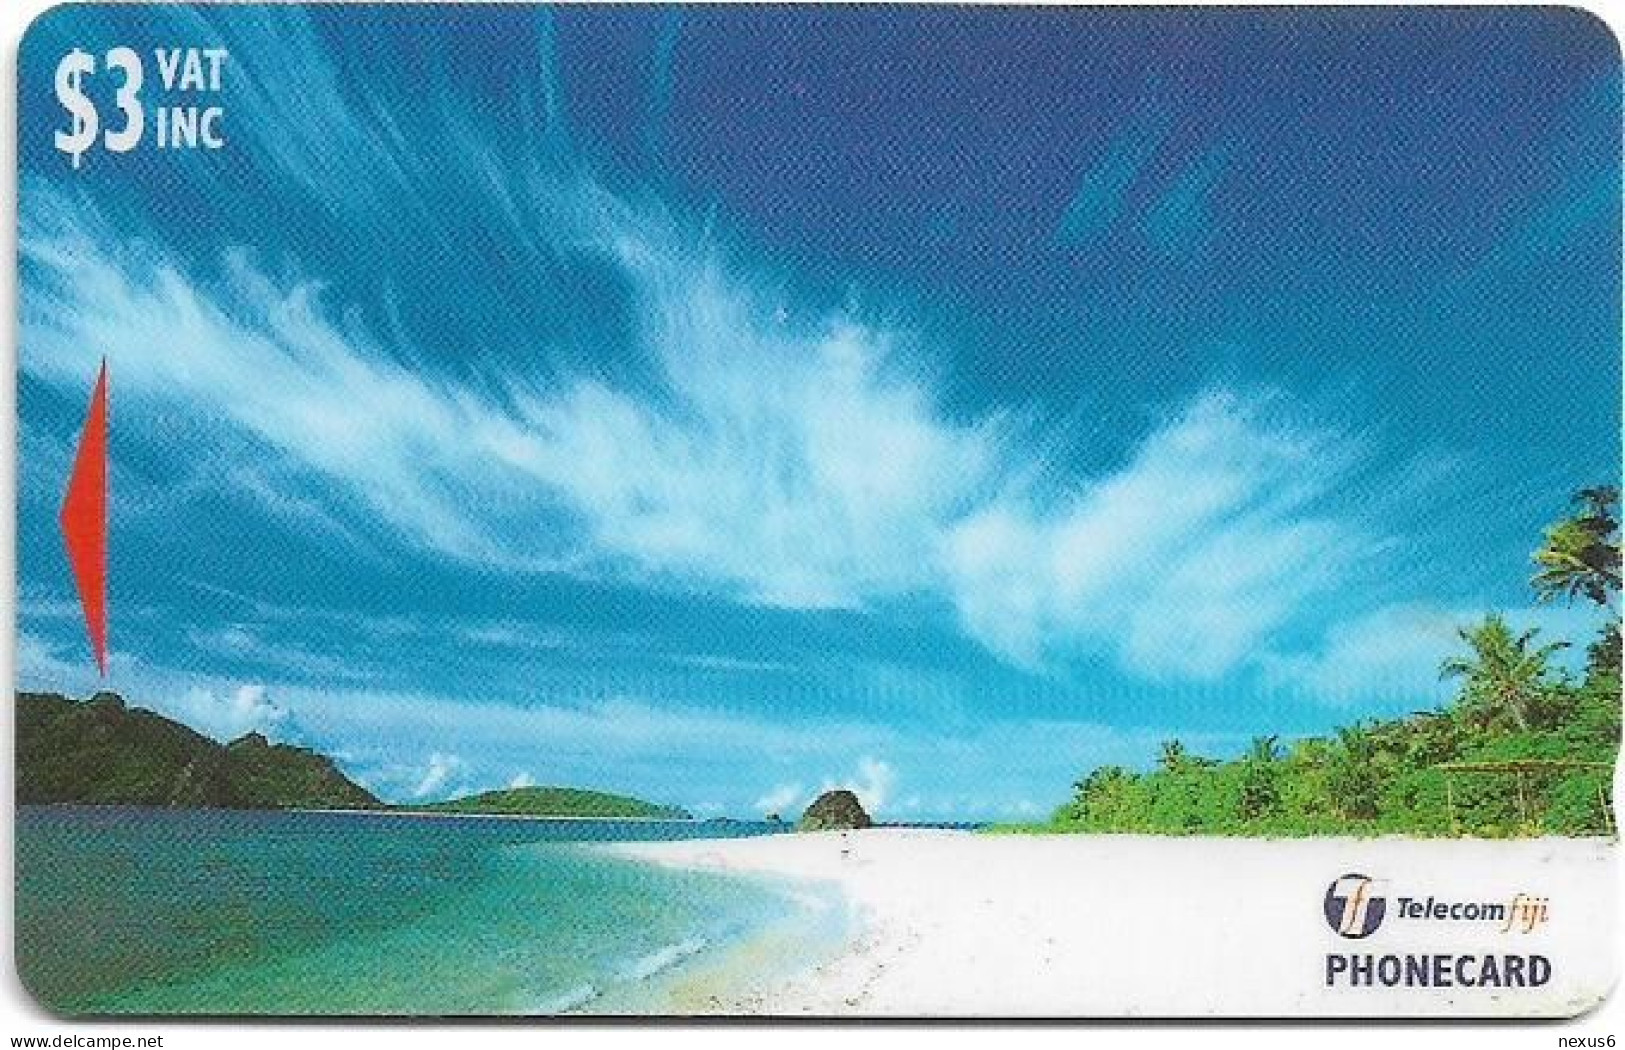 Fiji - Tel. Fiji - Yasawa Islands - Wayasewa - 26FJB - 1998, 3$, 50.000ex, Used - Figi